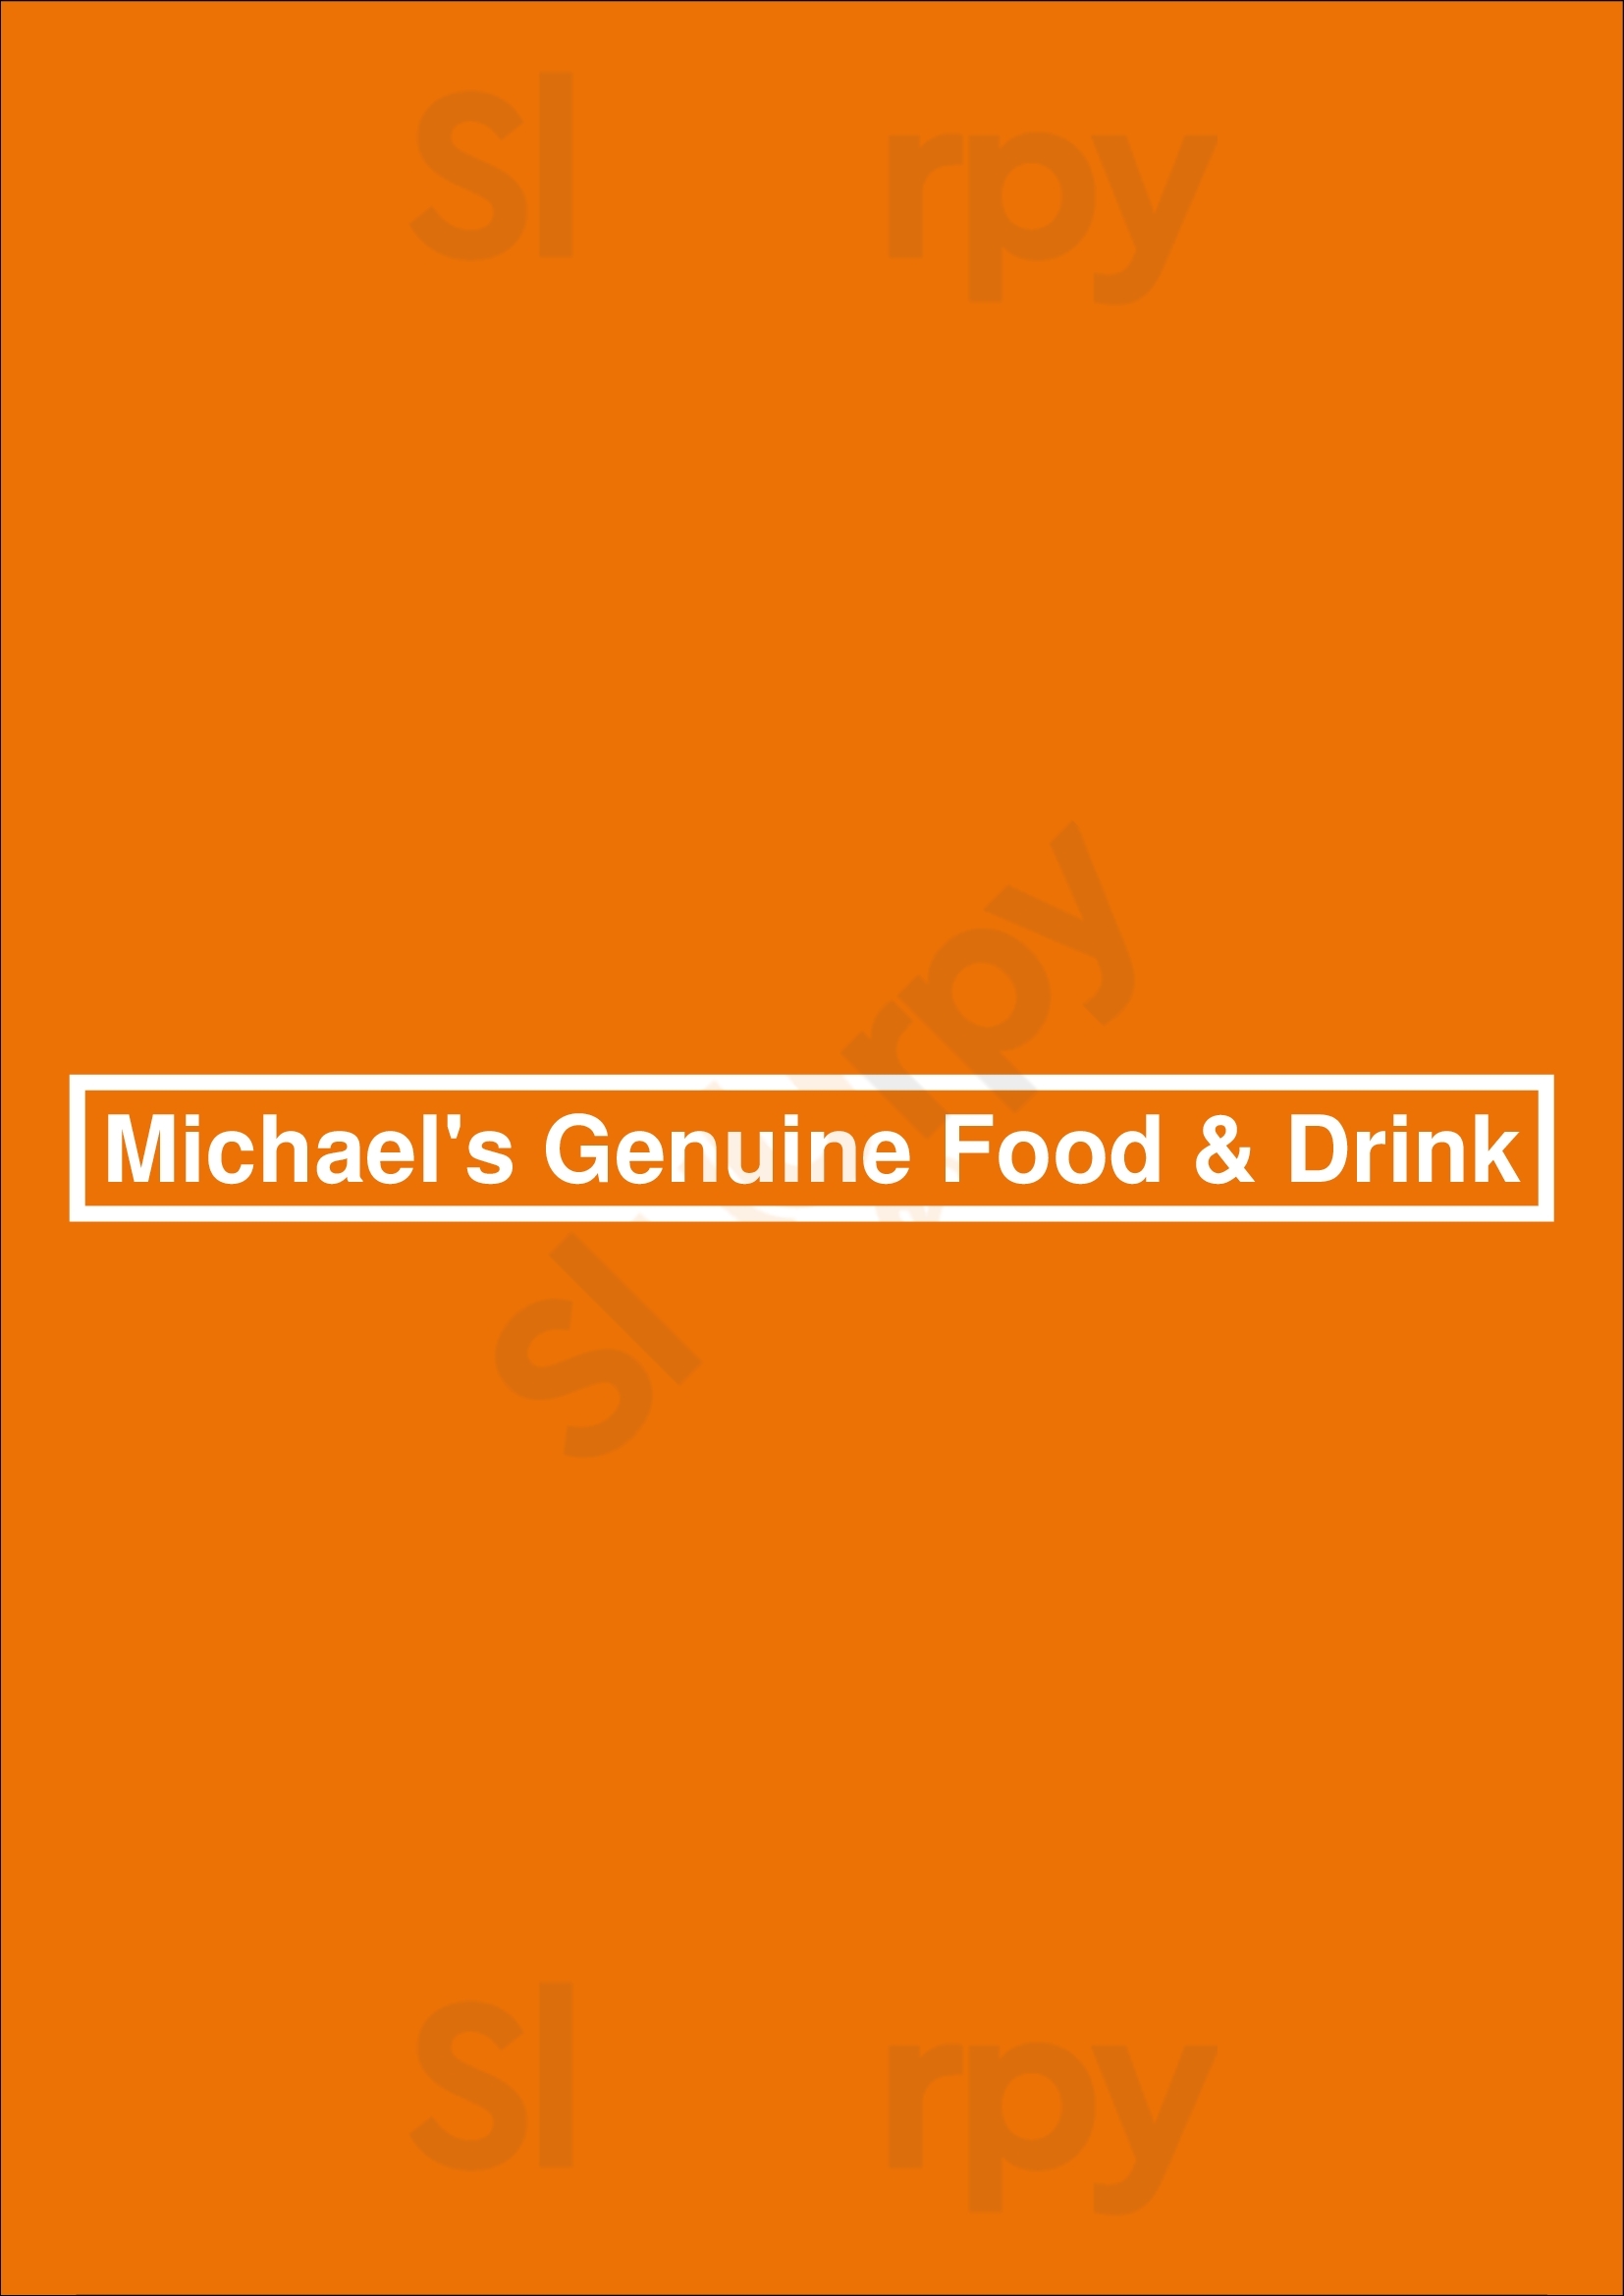 Michael's Genuine Food & Drink Miami Menu - 1